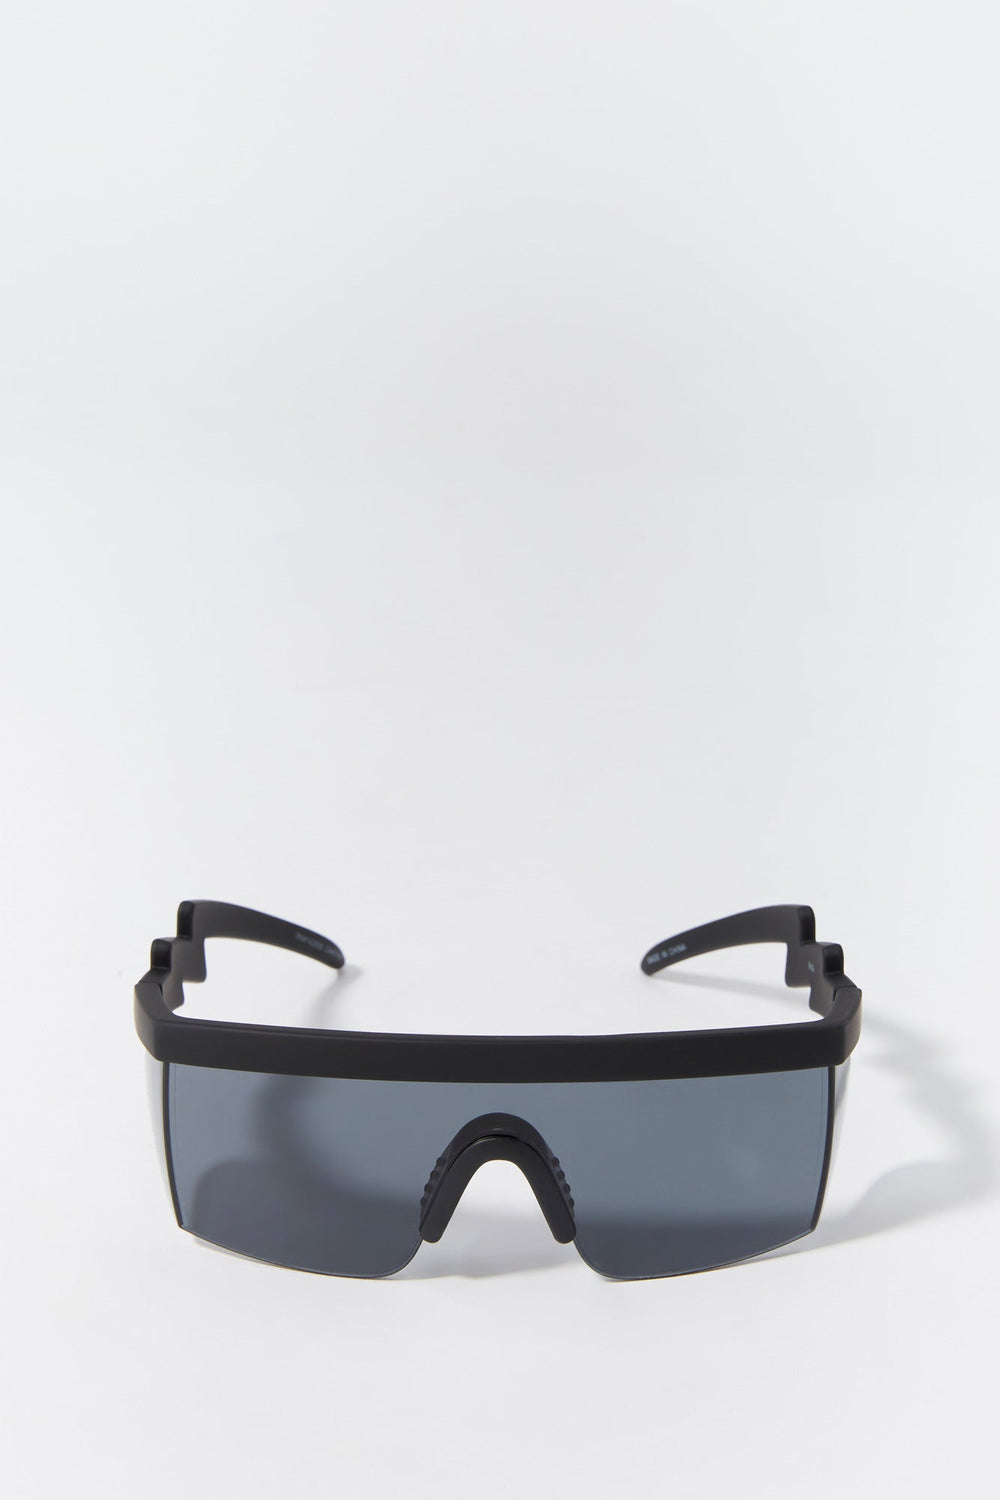 Black Lightning Arm Soft Touch Shield Sunglasses Black Lightning Arm Soft Touch Shield Sunglasses 3